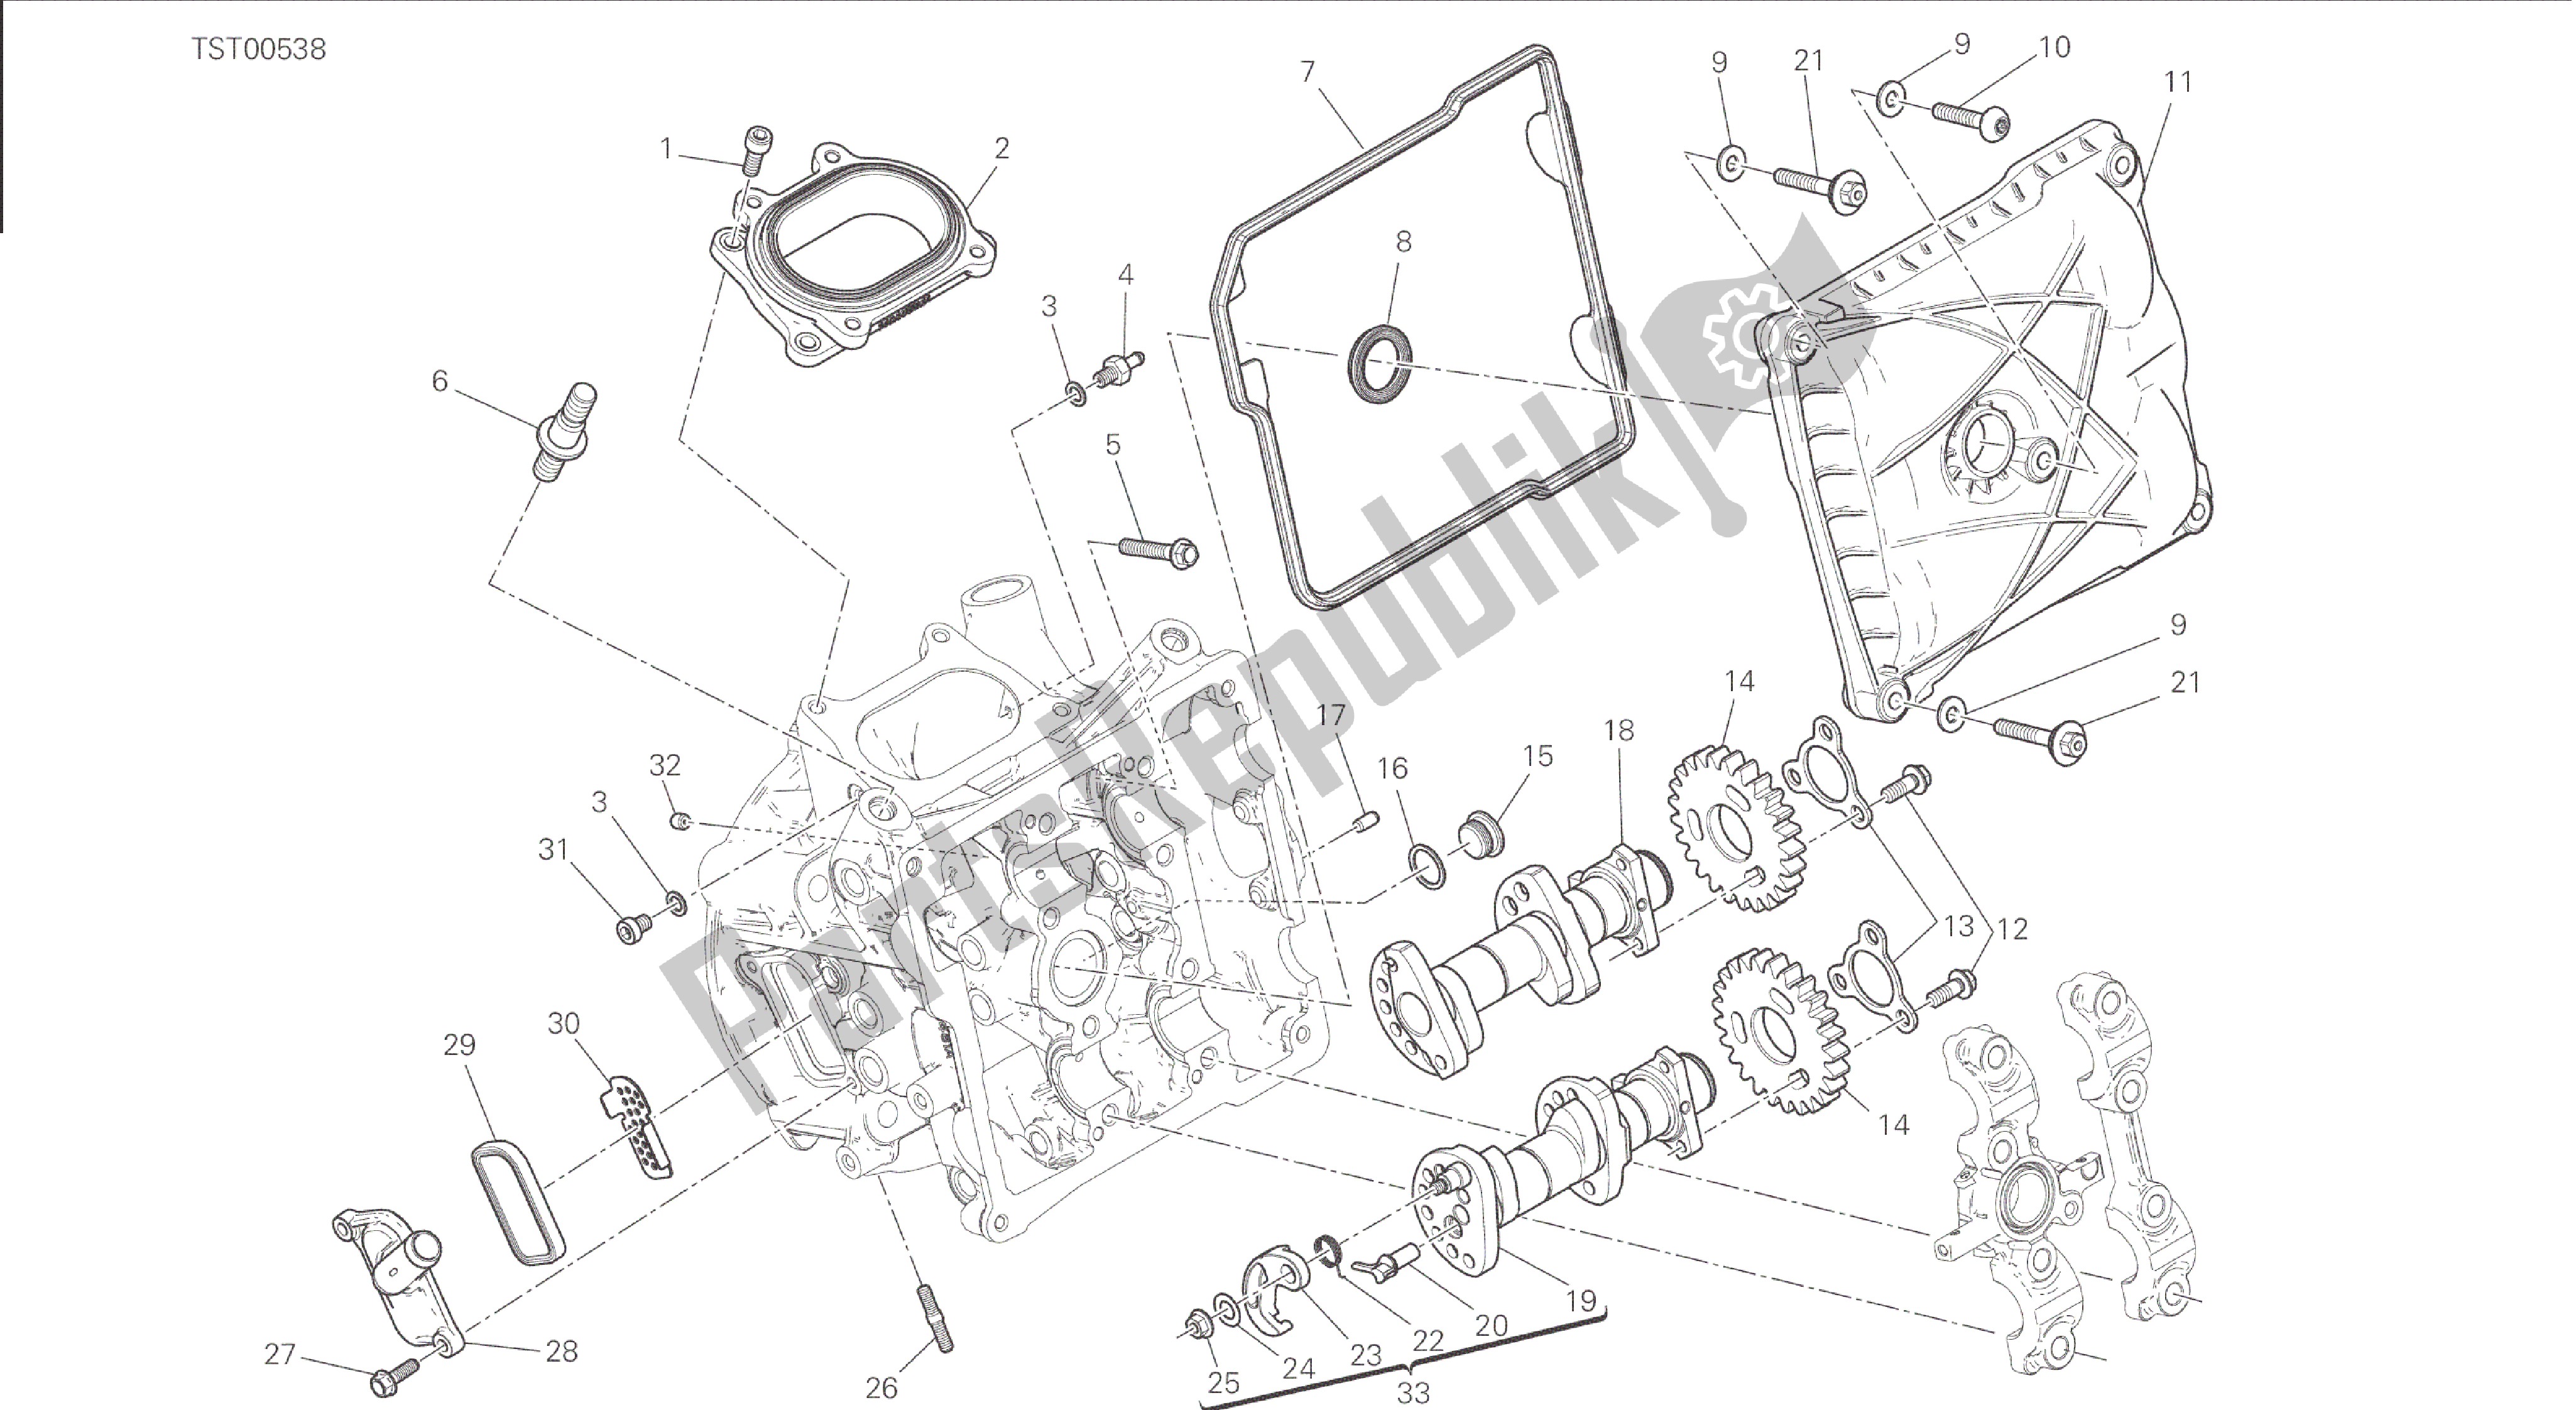 Alle onderdelen voor de Tekening 013 - Testa Orizzontale - Distribuzione [mod: 1199r; Xst: Aus, Eur, Fra, Jap] Groepsmotor van de Ducati Panigale 1198 2015